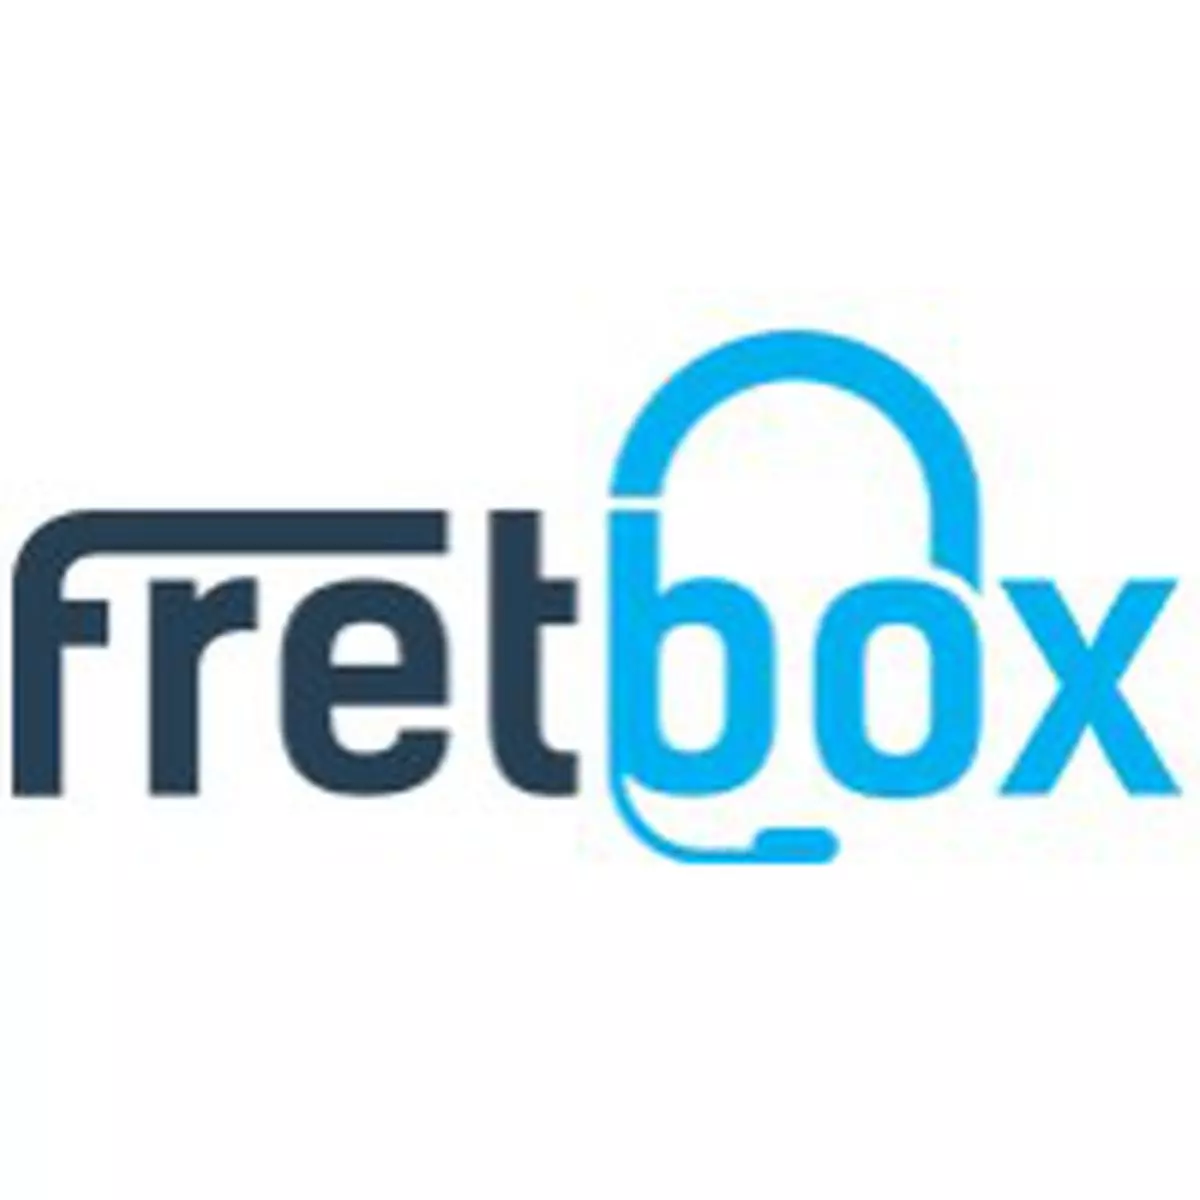 Fretbox logo 